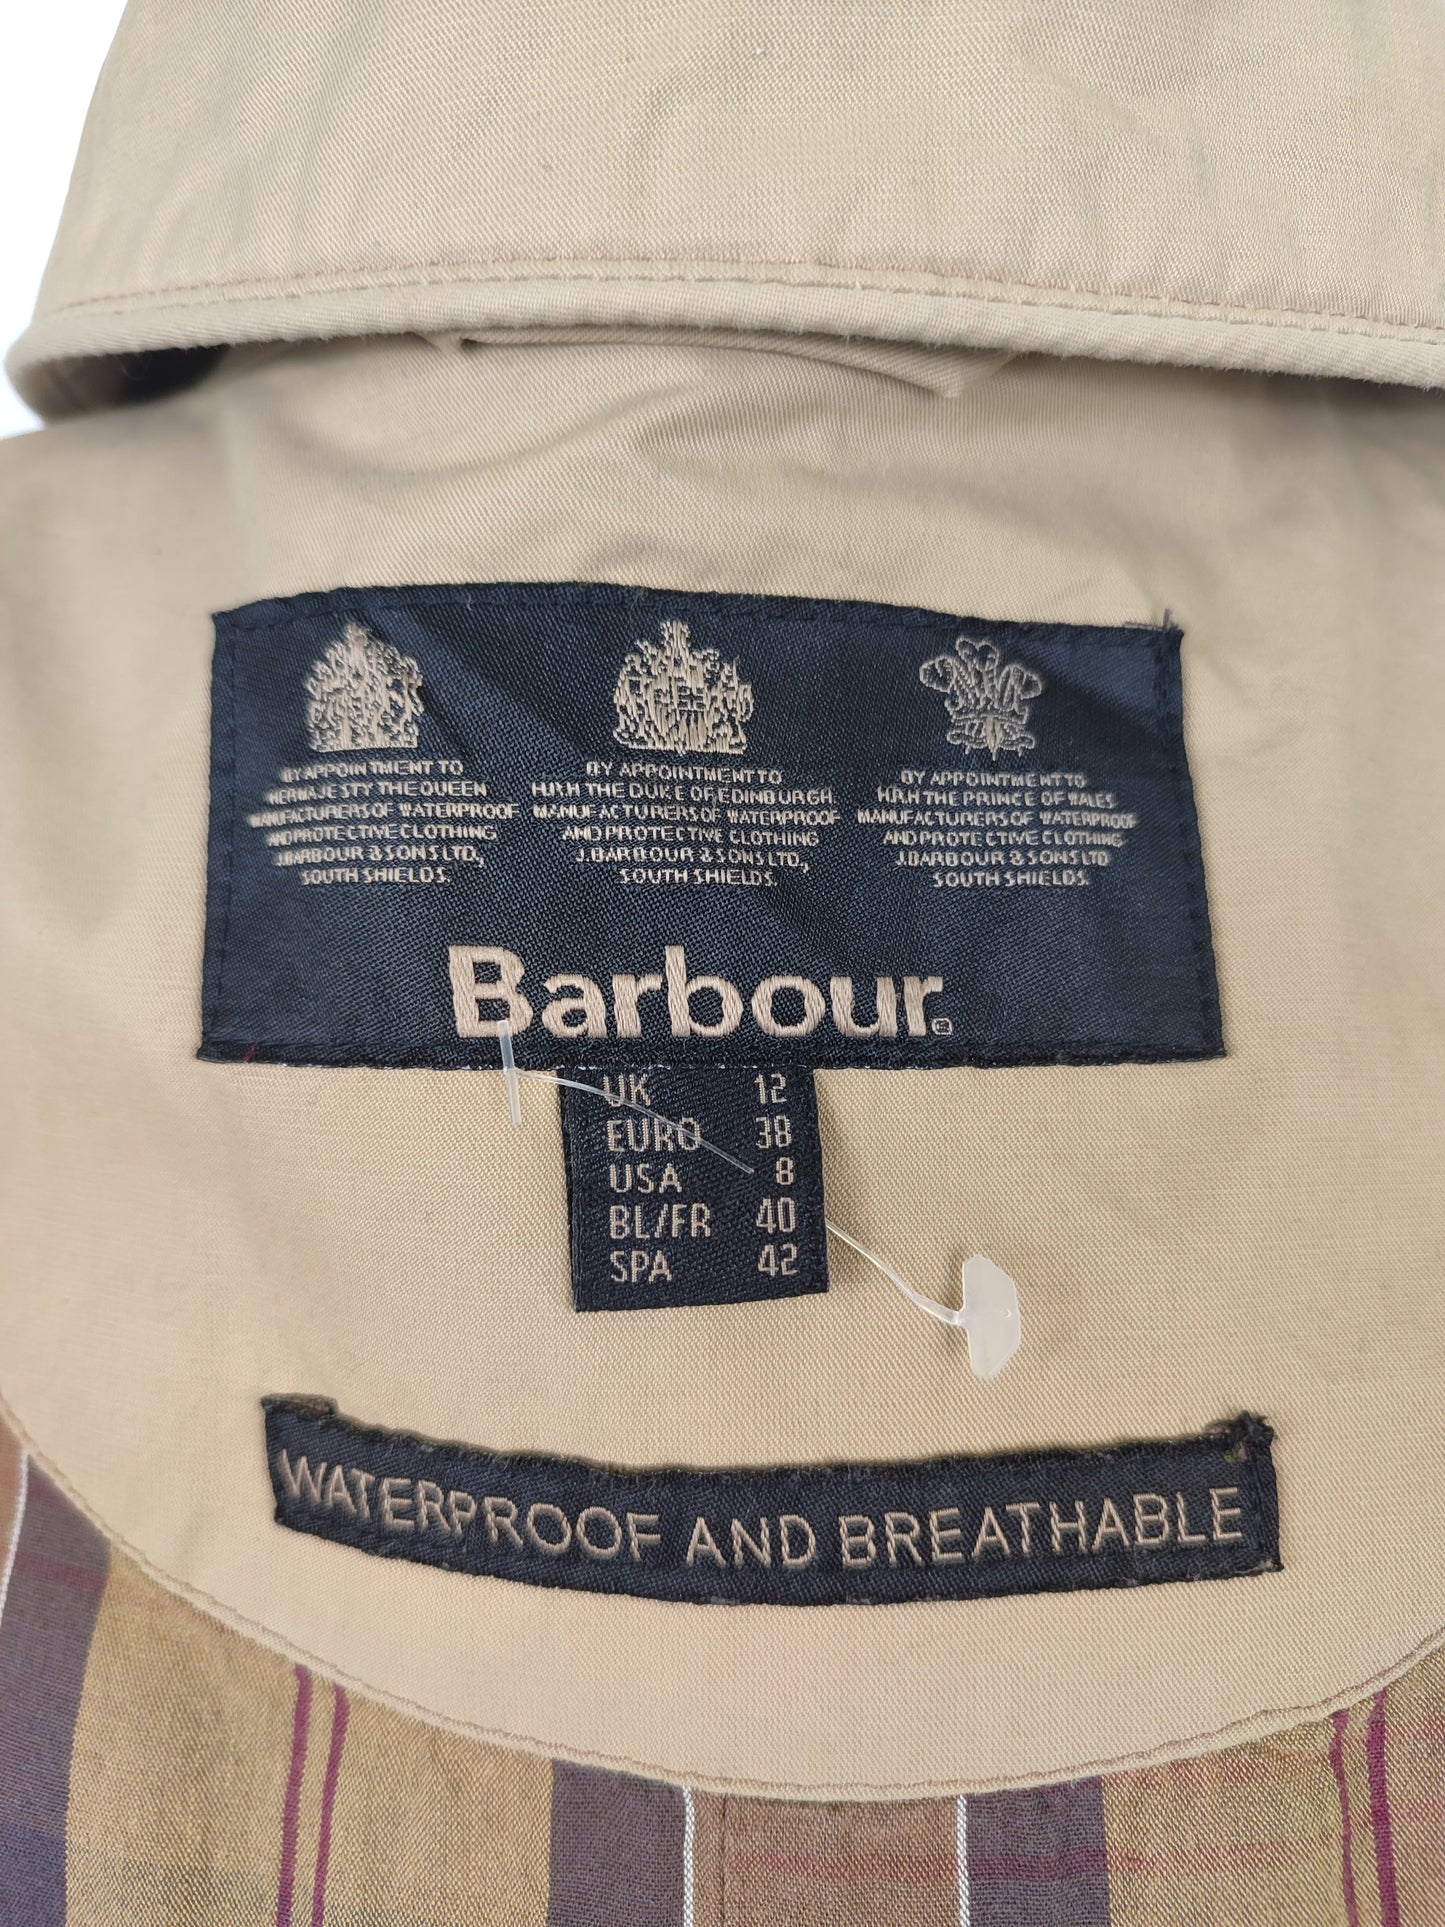 Trench Barbour Beige da donna Medium Uk12 - Valerie Trench Lady Jacket beige size uk12